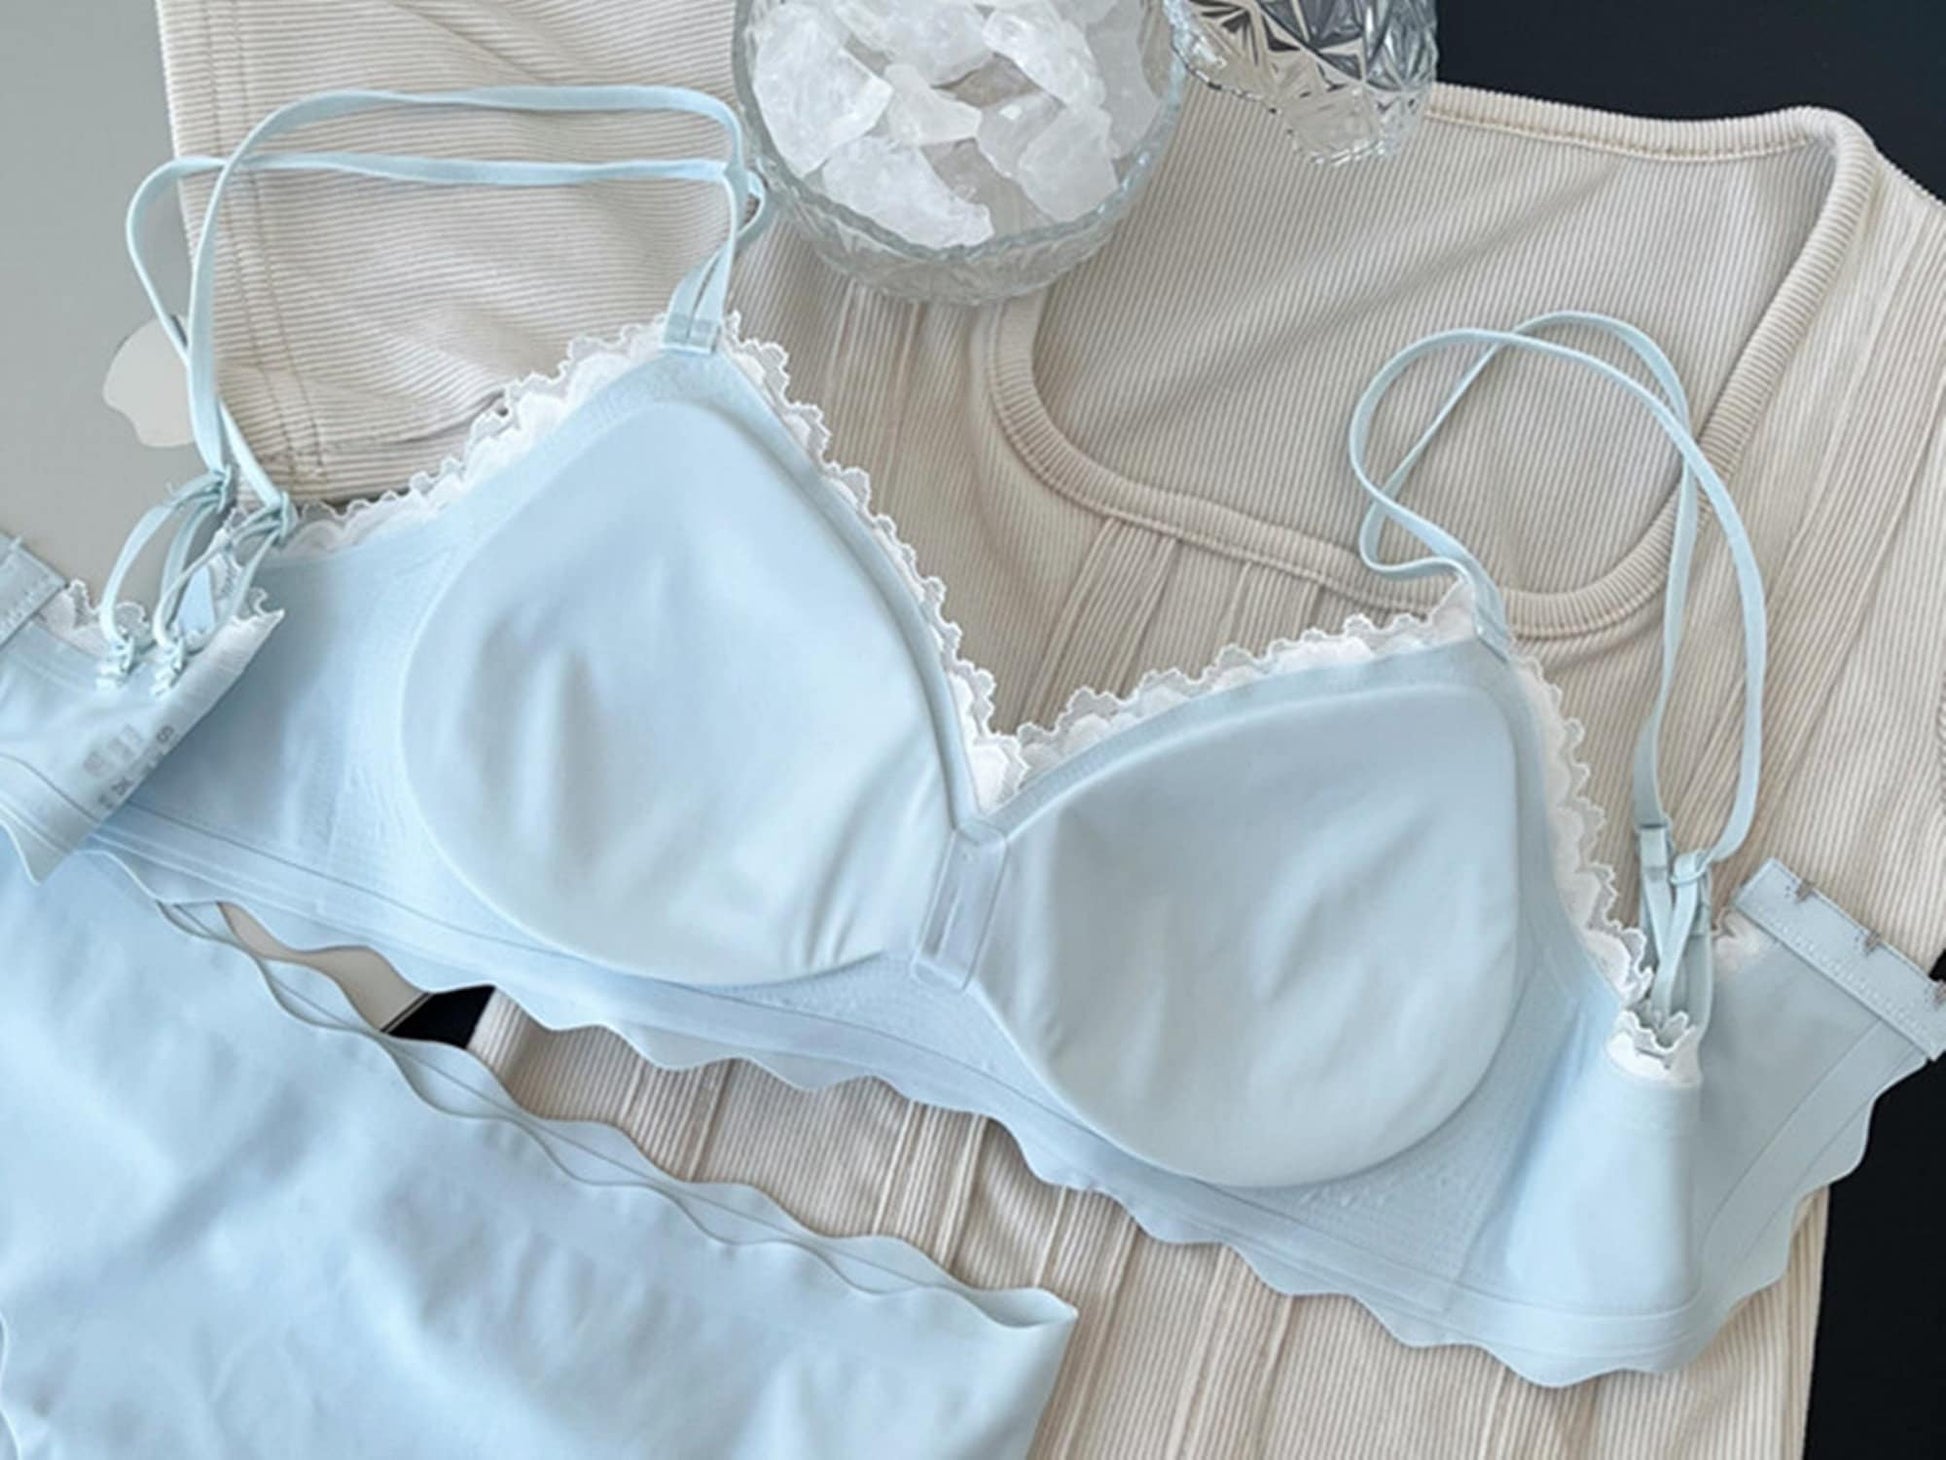 Alpha C Seamless Smooth Wireless lingerie Comfort Thin Padded Support Bralette Push up bra for small breast bra LingerieSetArt